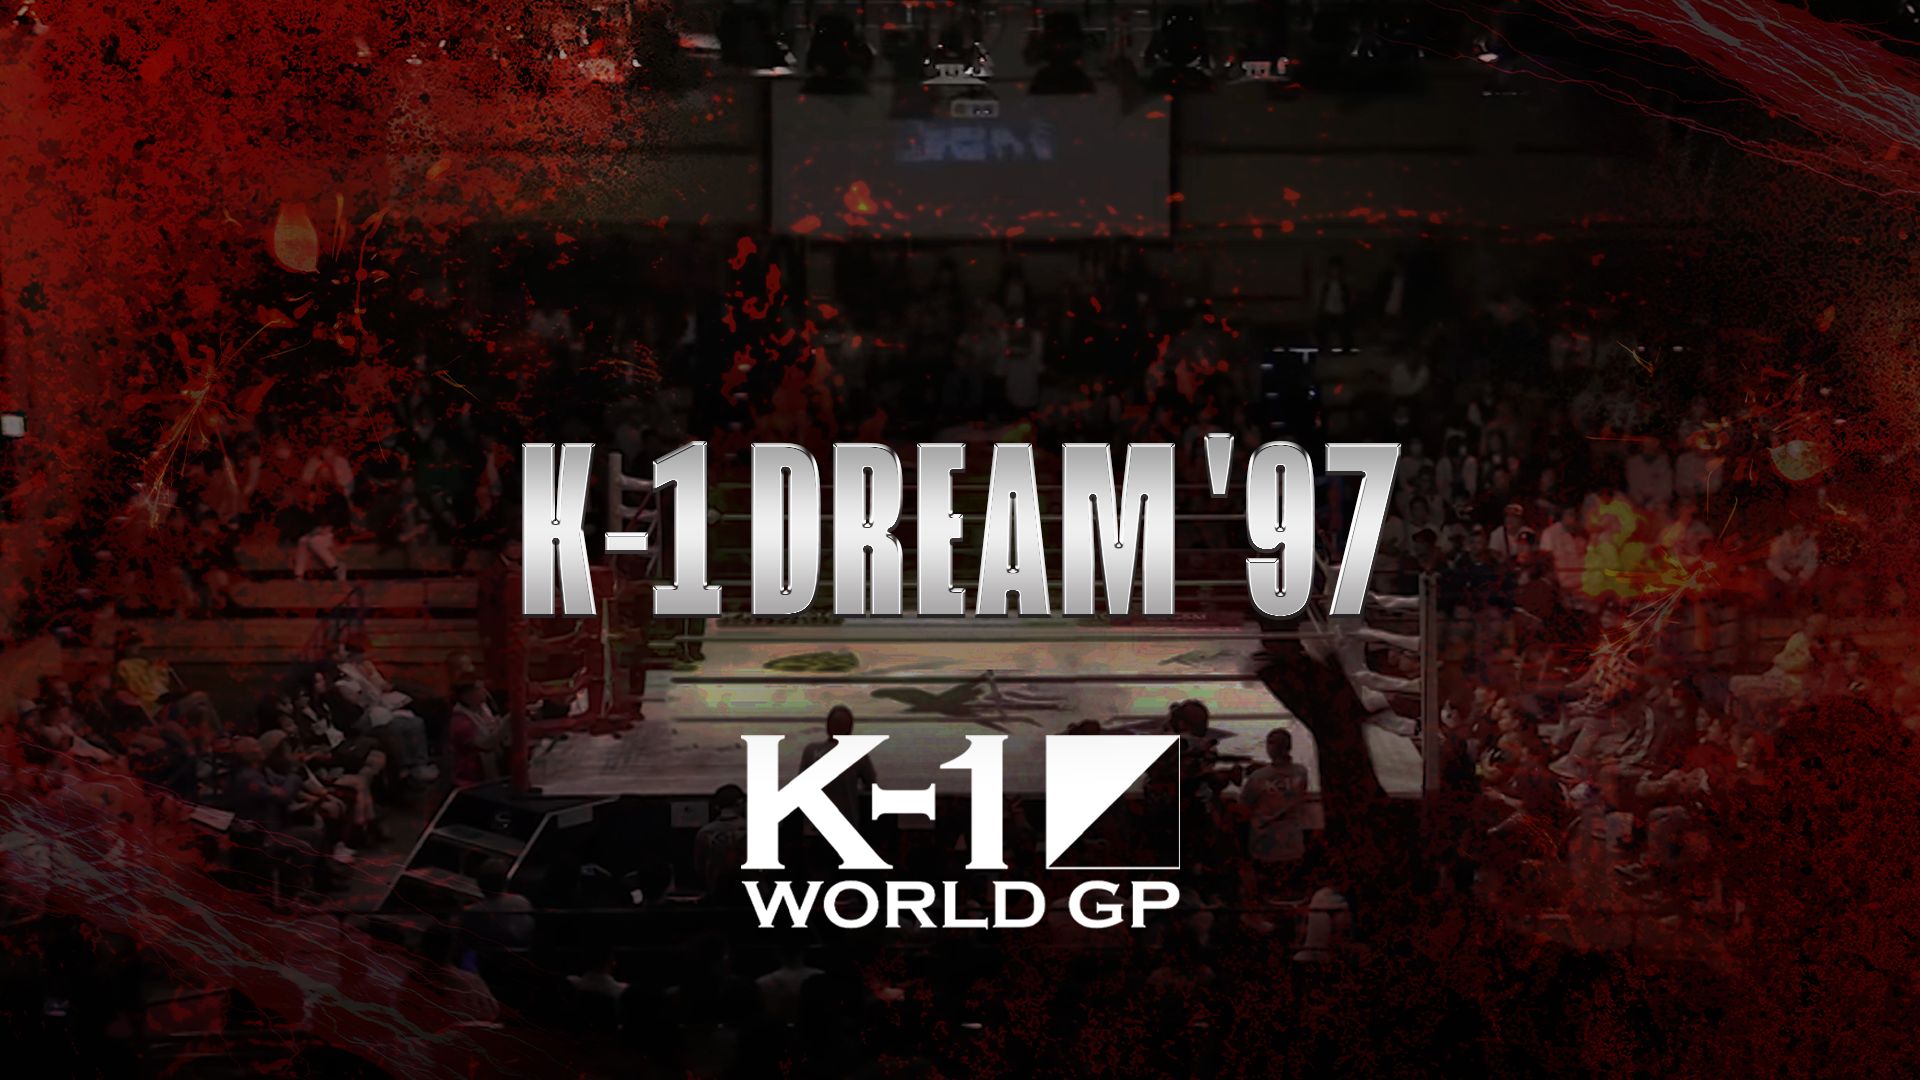 K-1 Dream '97